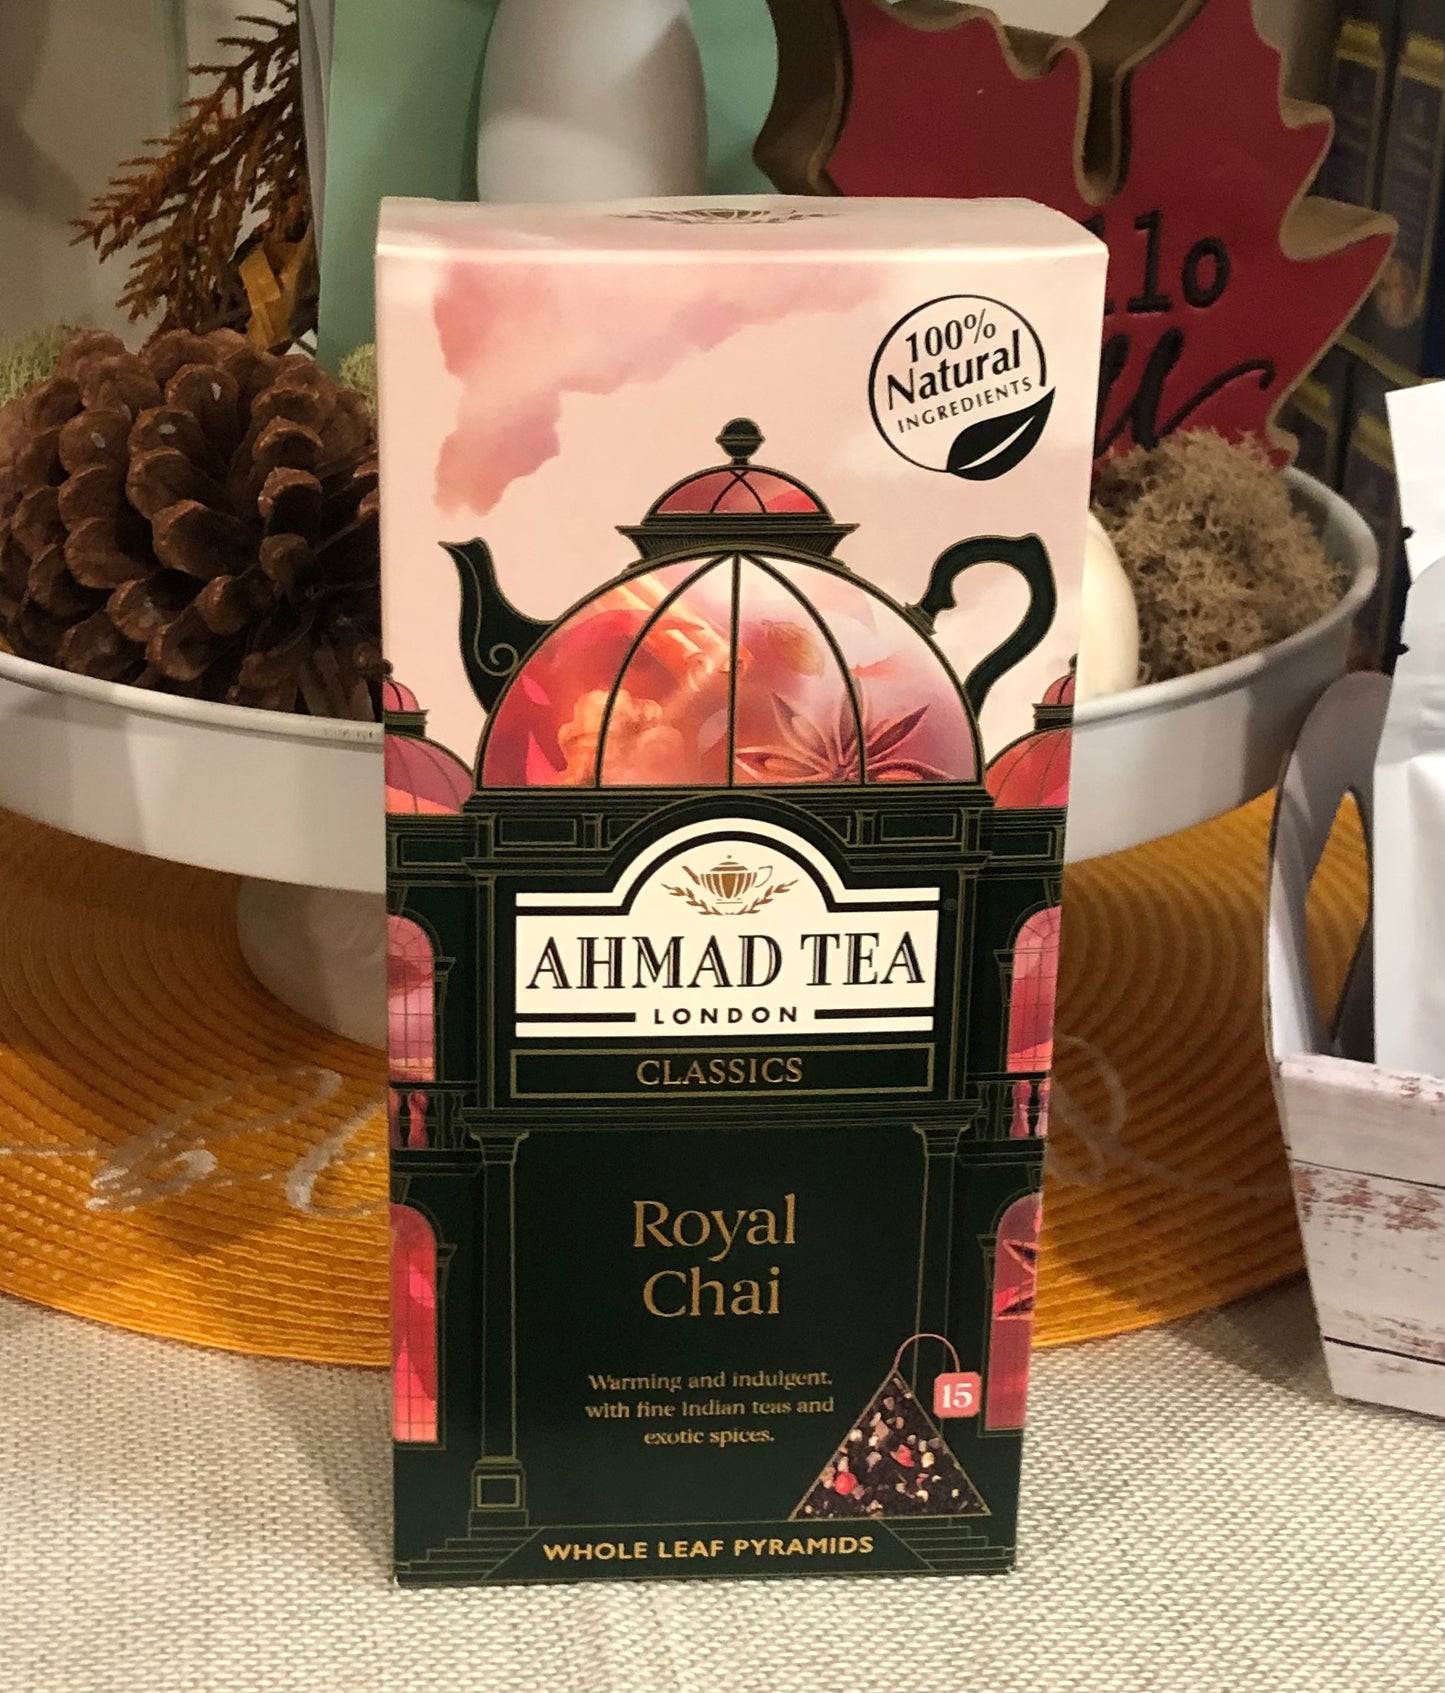 Royal Chai -Ahmad Tea